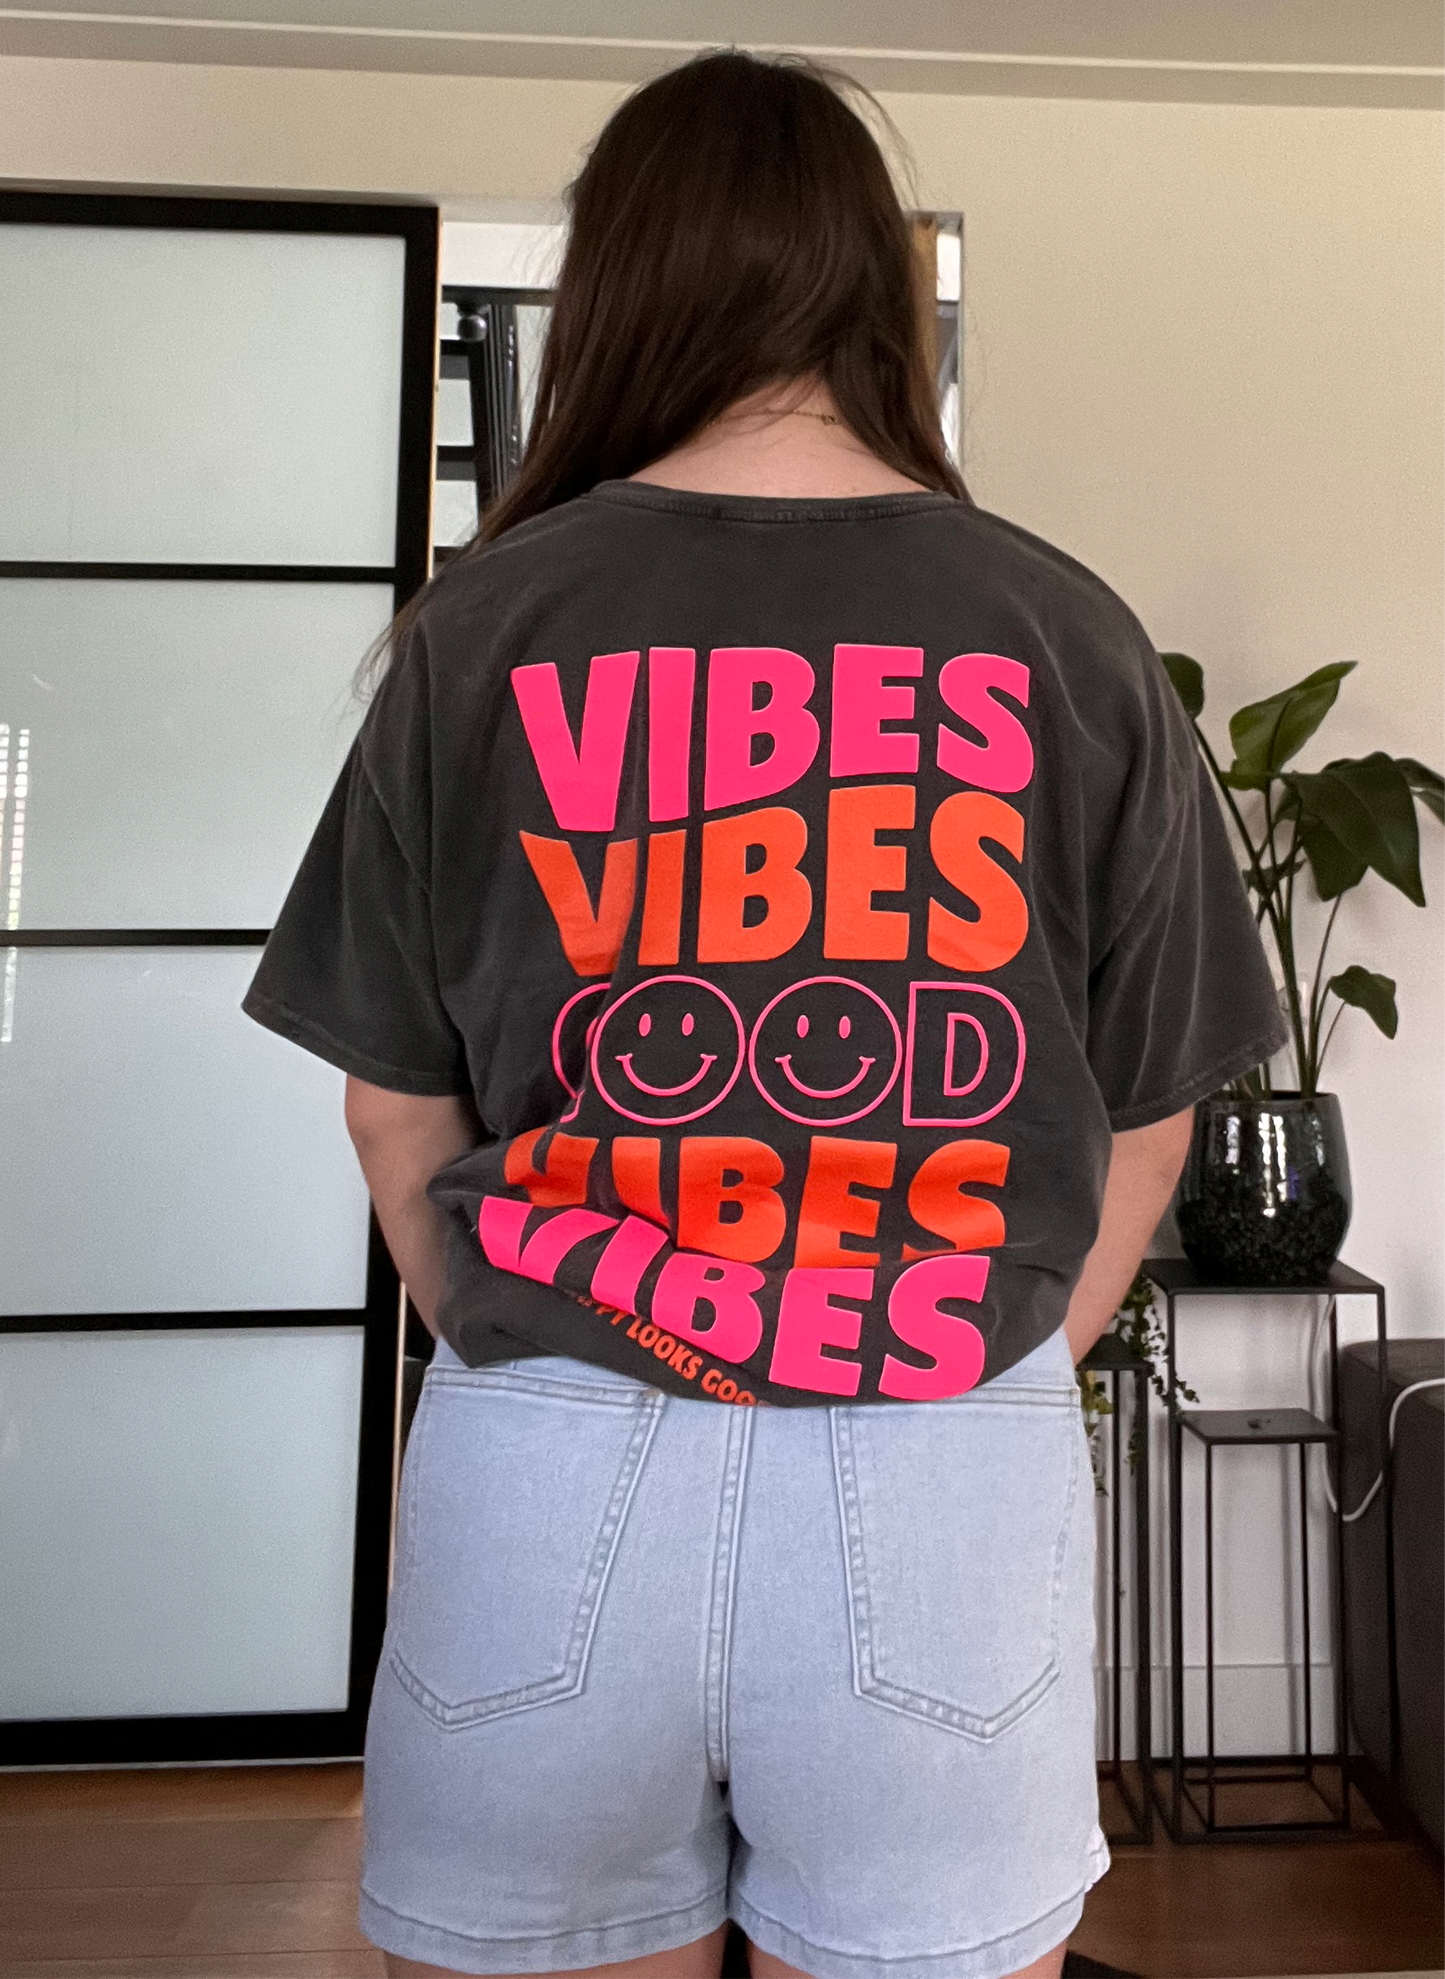 Good vibes t-shirt